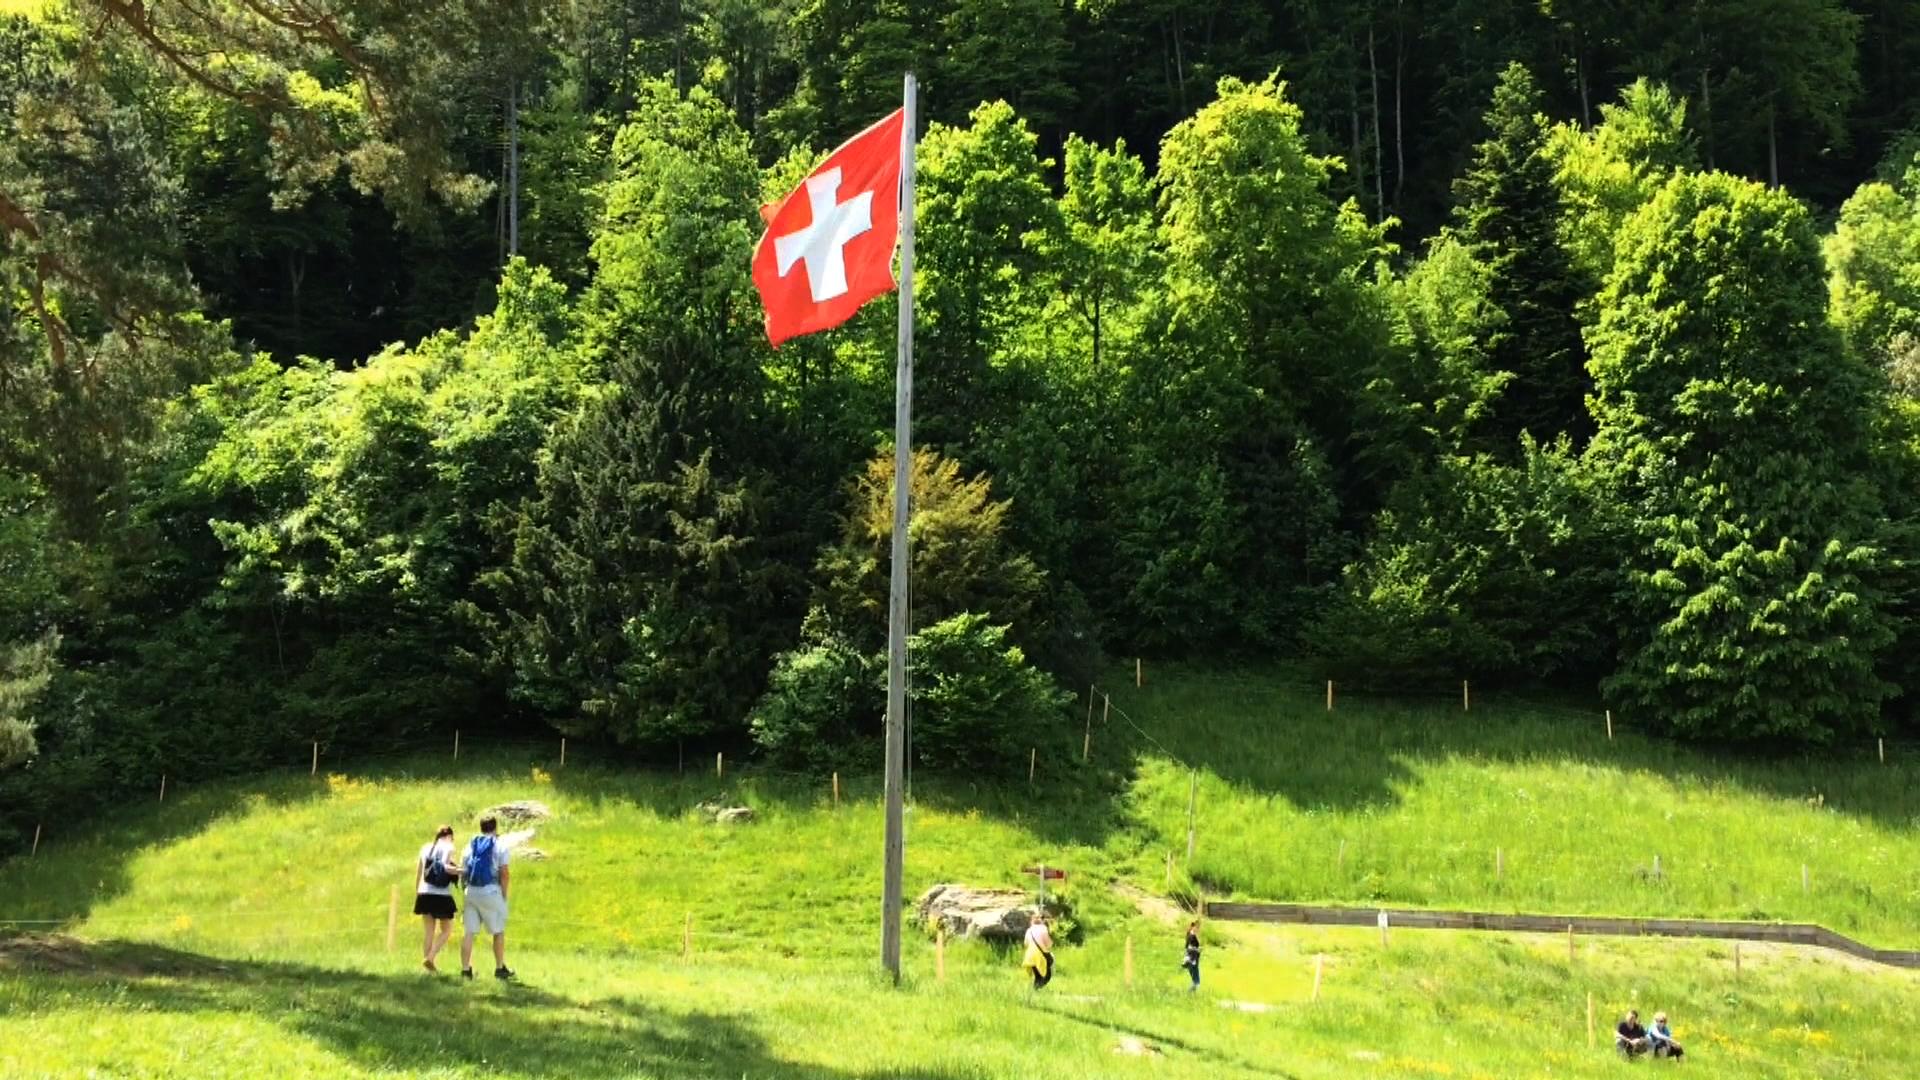 The Rütli meadow, the birthplace of Switzerland